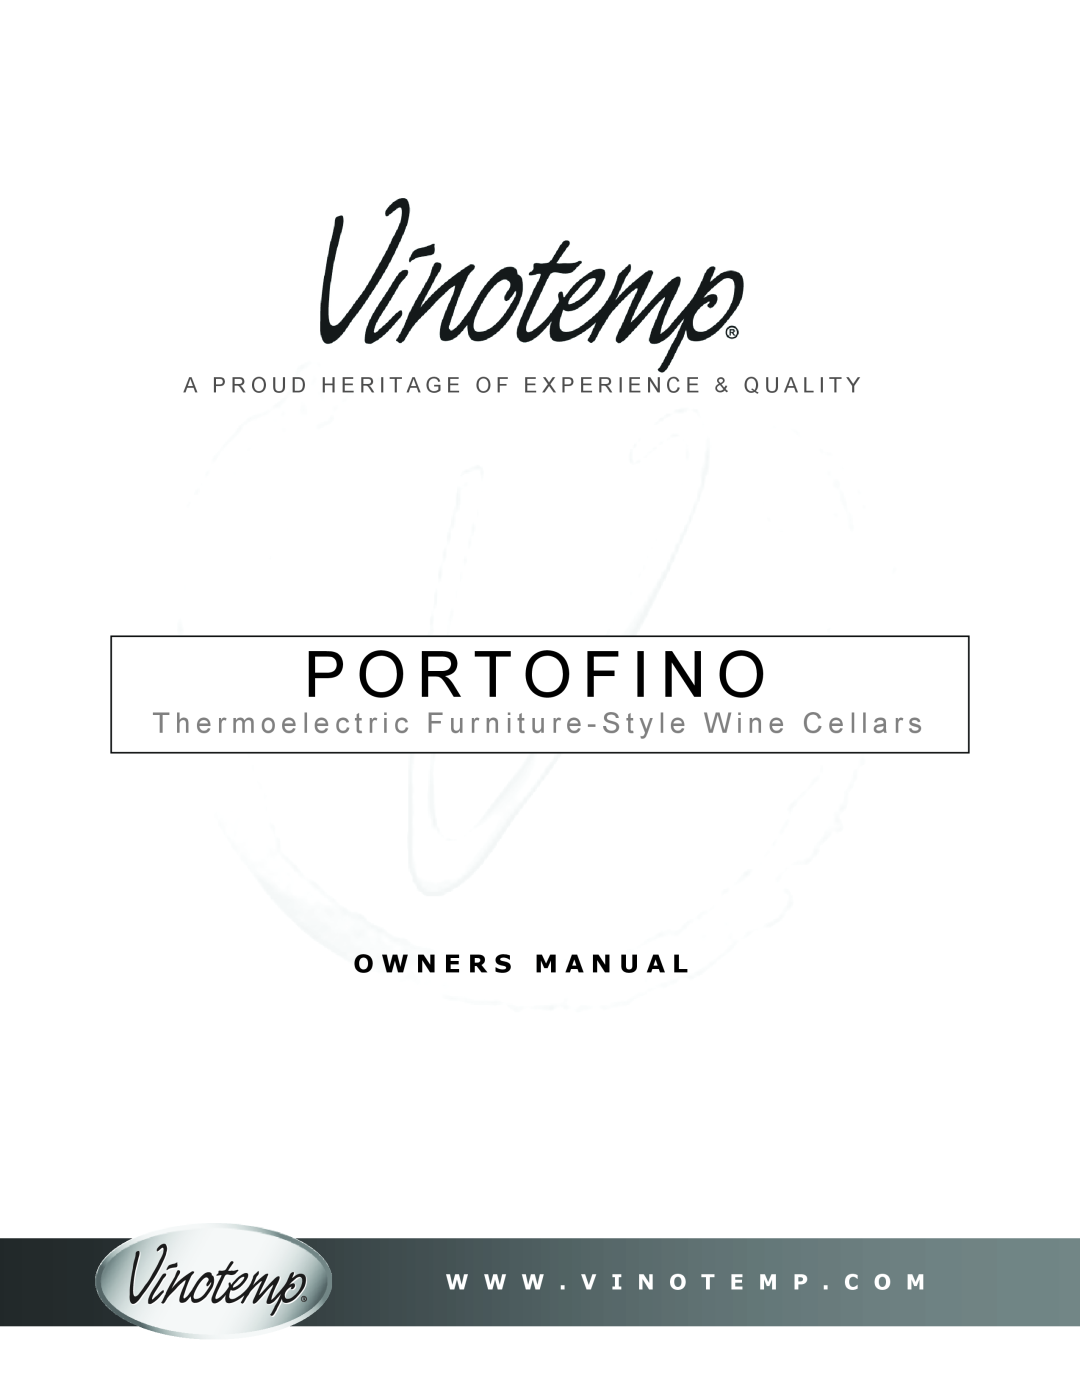 Vinotemp Portofino owner manual O W N E R S M A N U A L, W W W . V I N O T E M P . C O M, P O R T O F I N O 